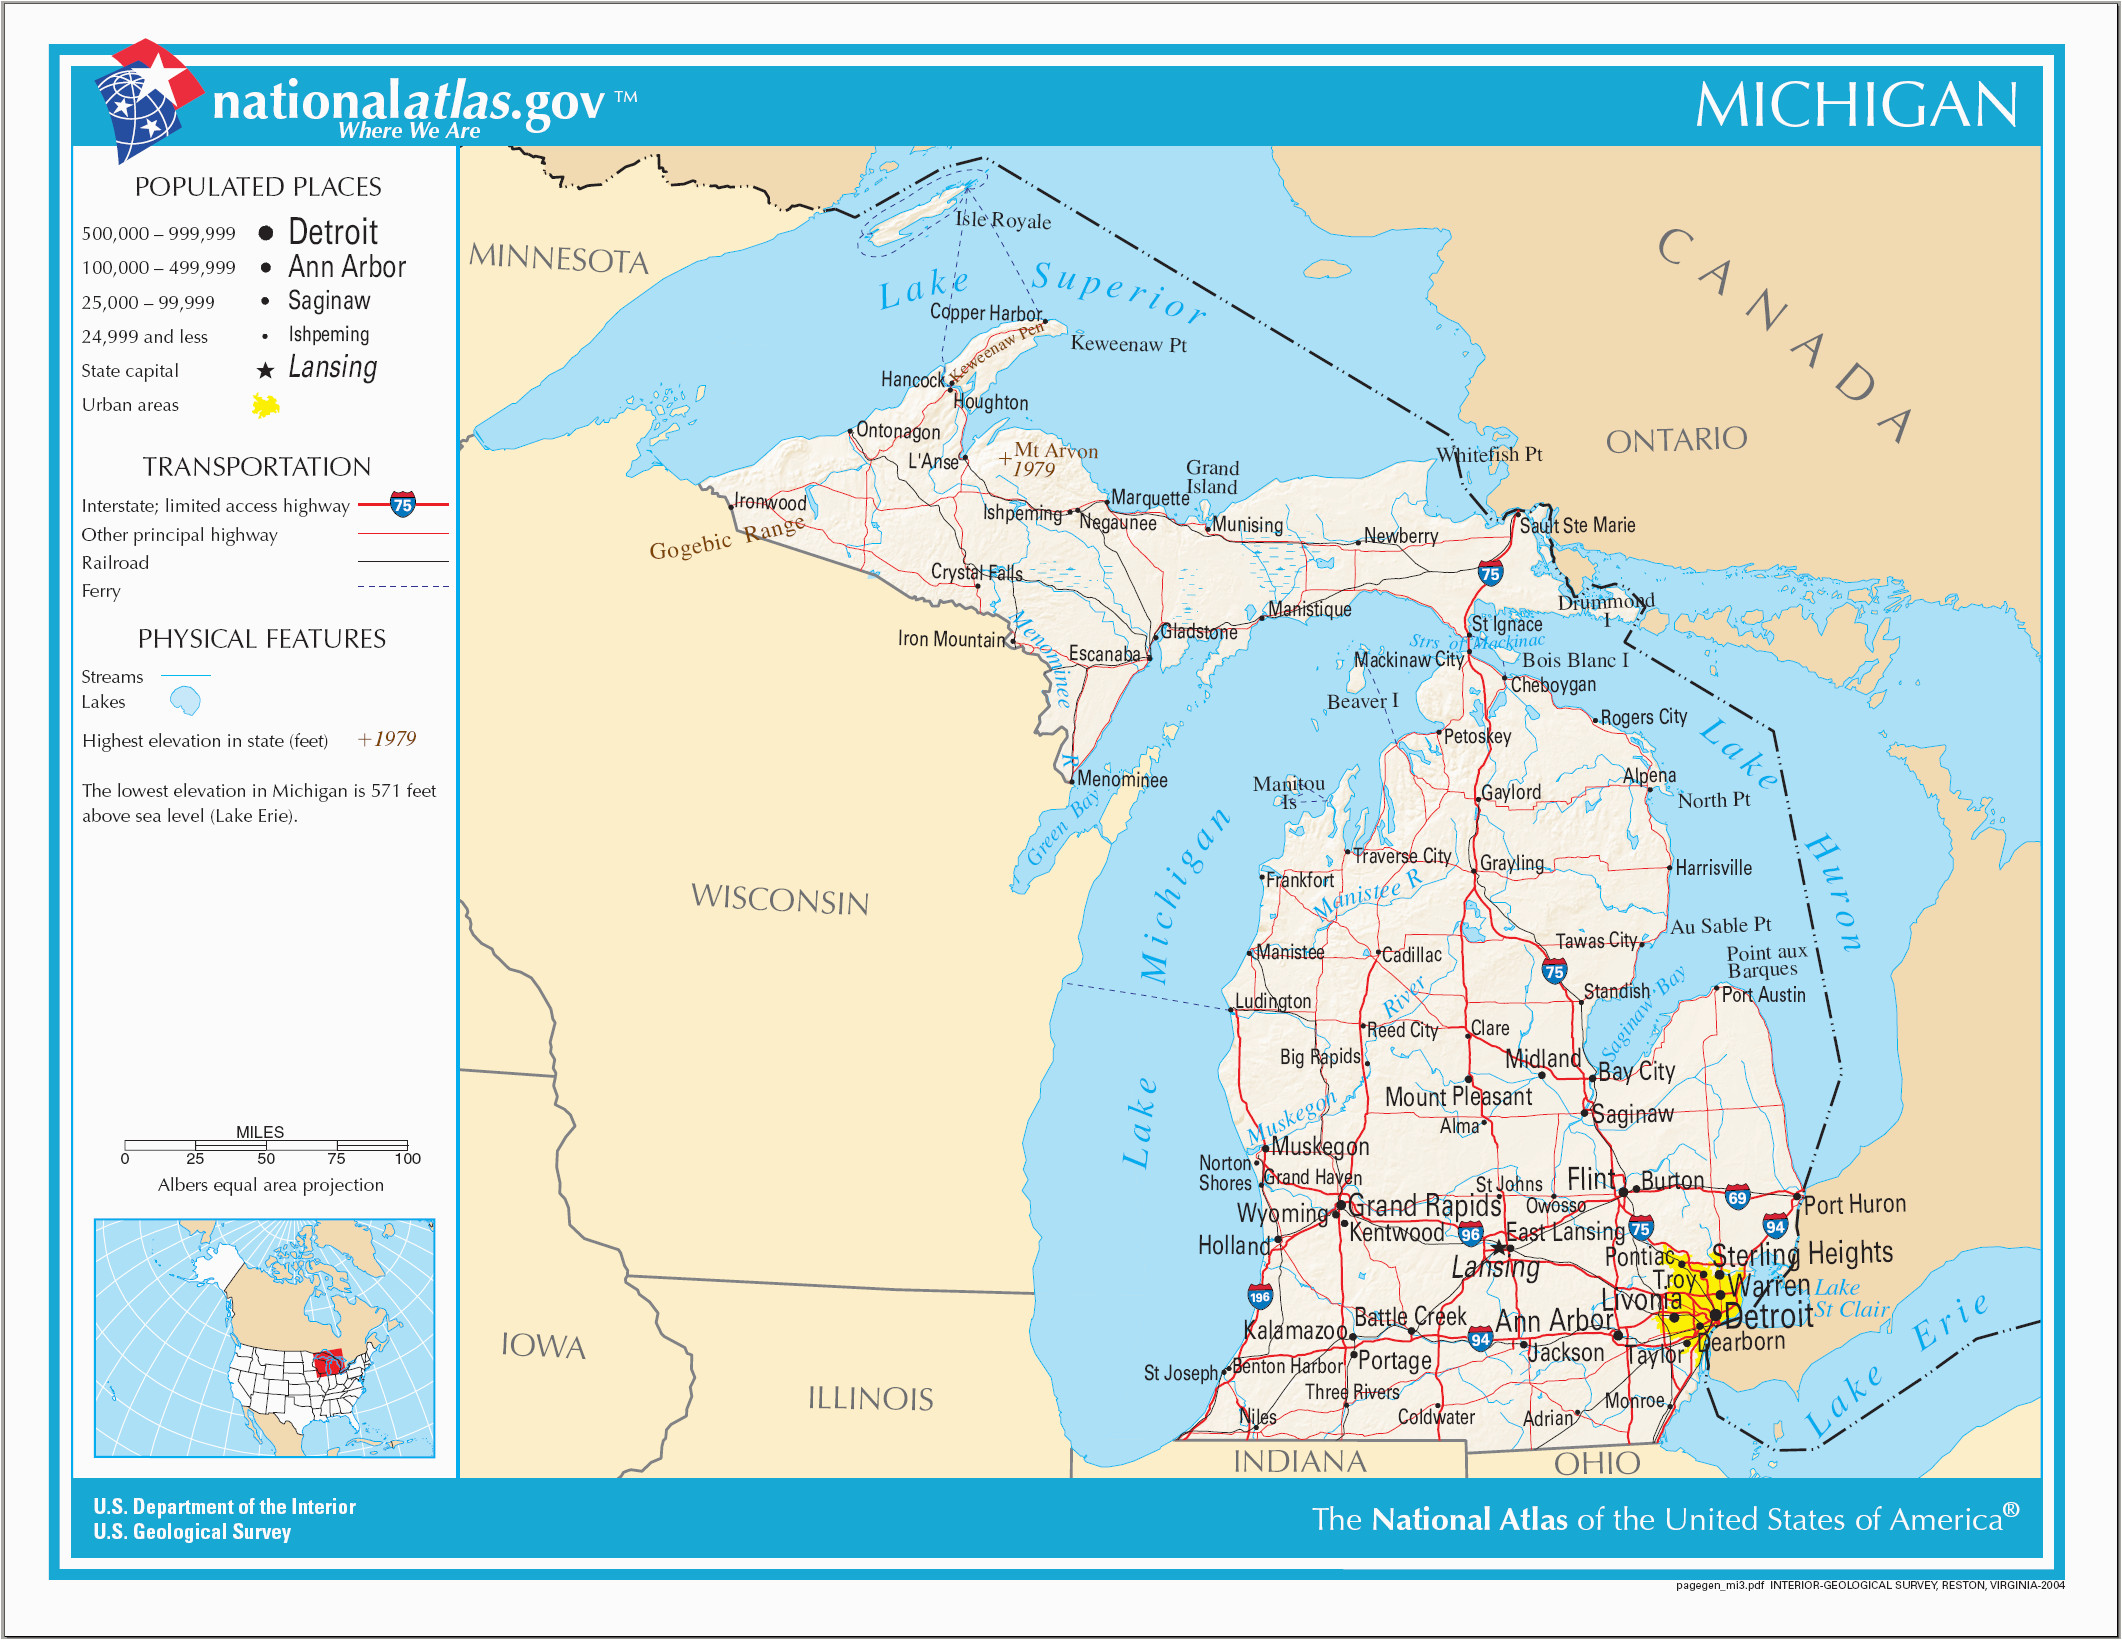 Owosso Michigan Map Datei Map Of Michigan Na Png Wikipedia